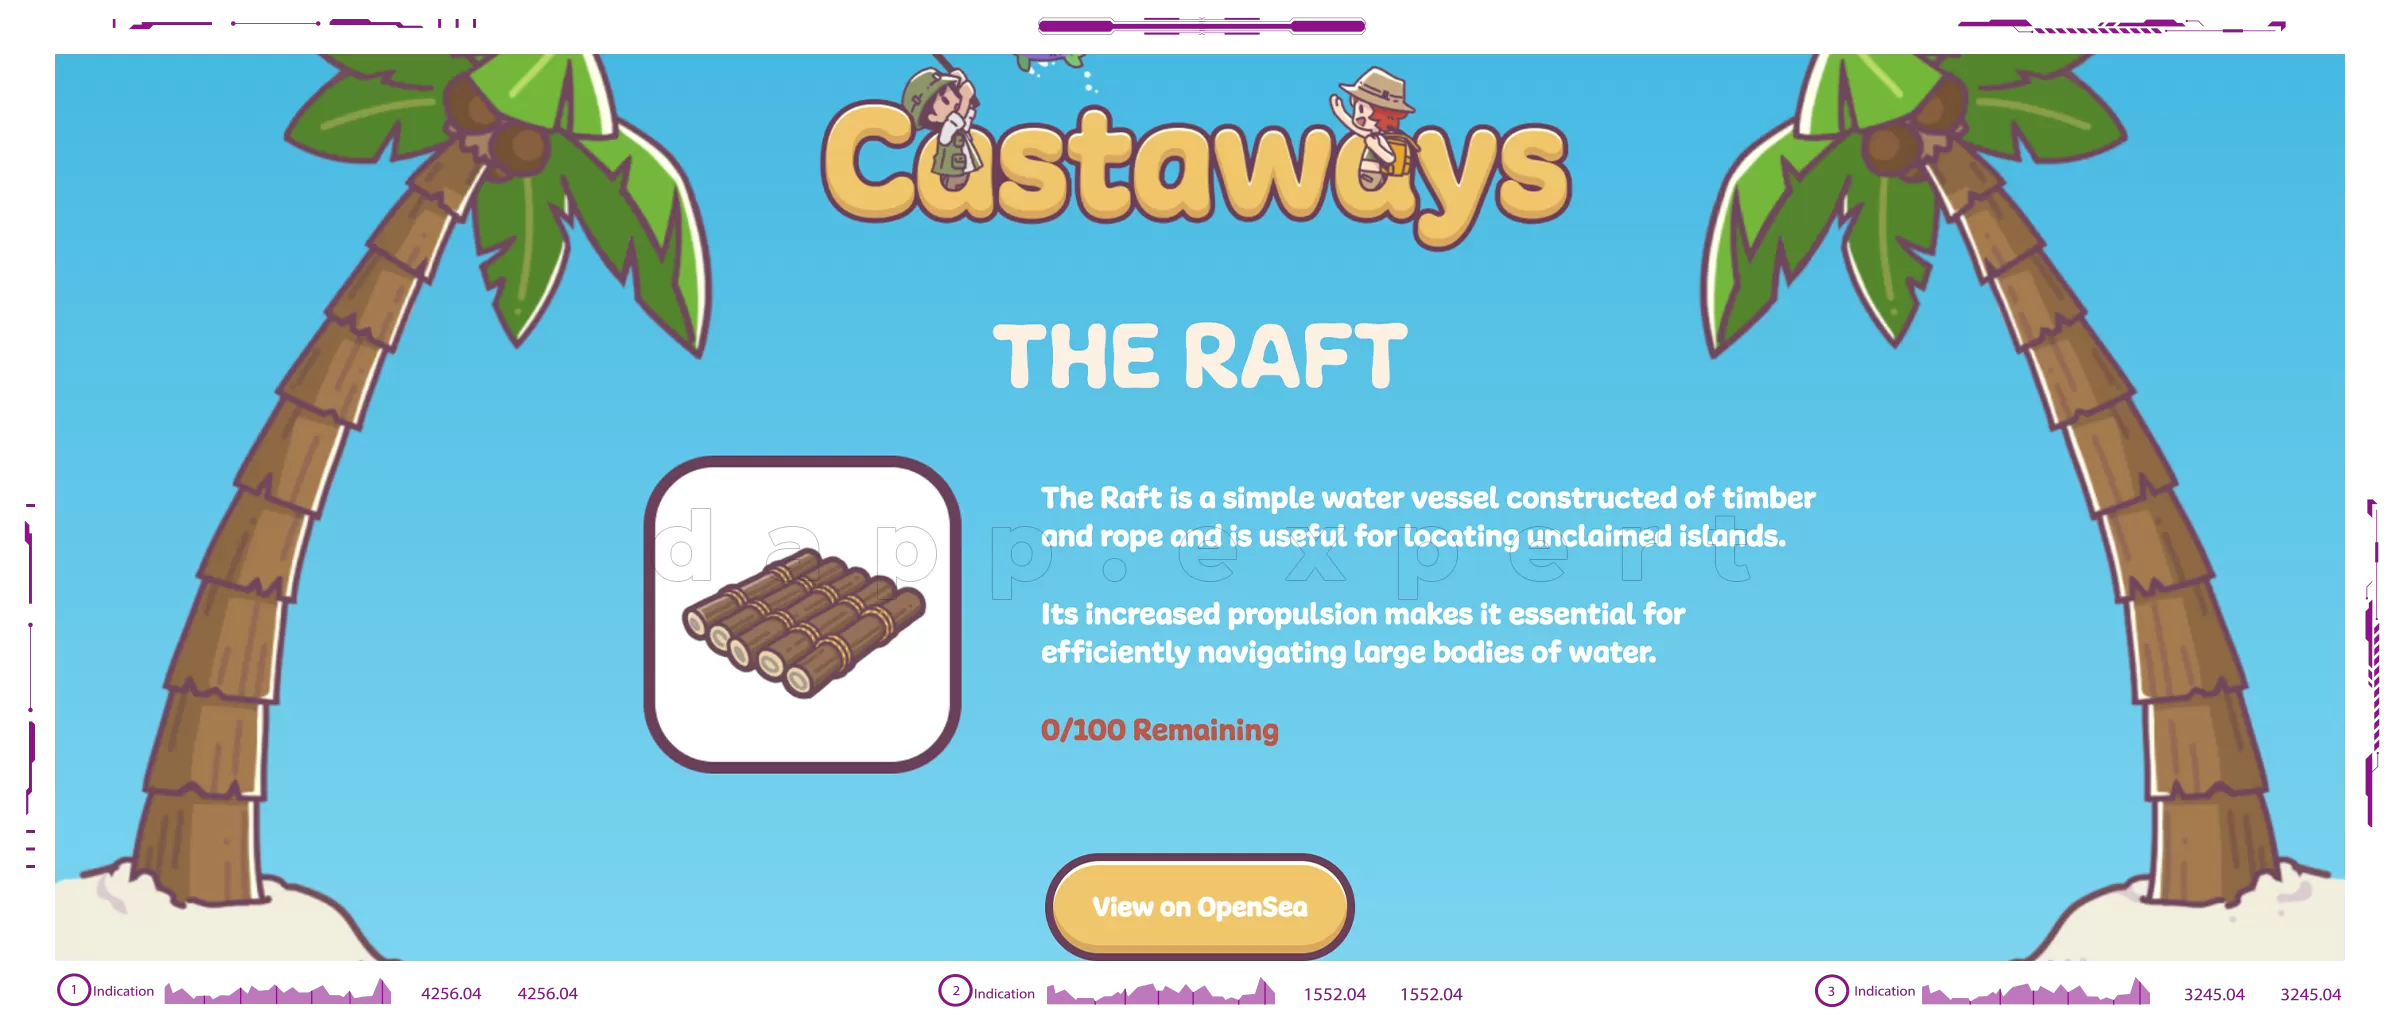 Dapp Castaways - The Raft